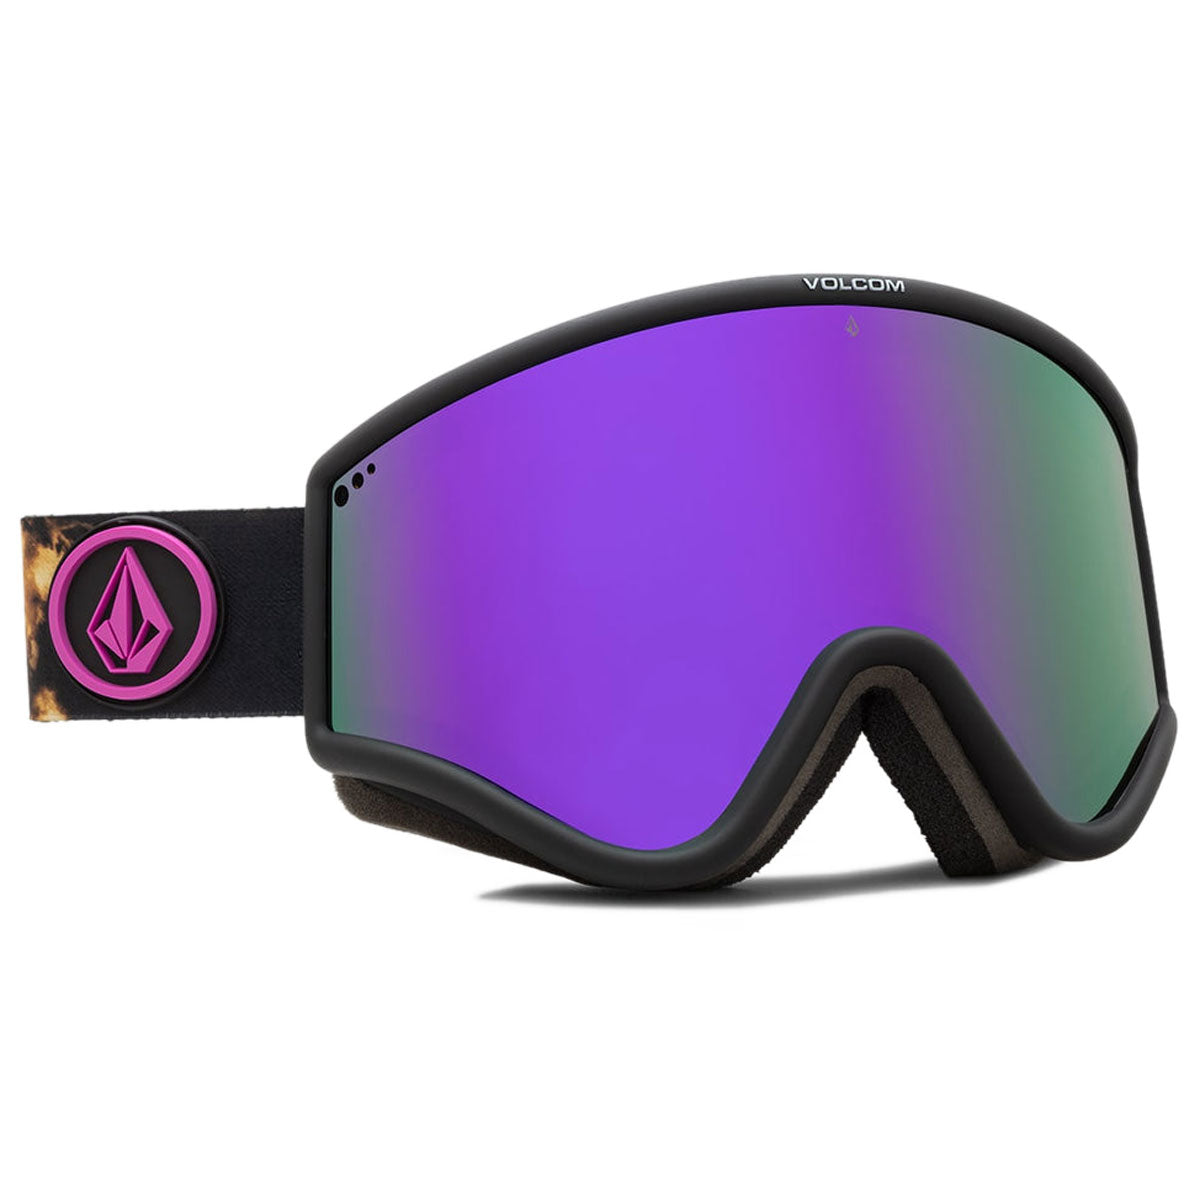 Volcom Yae Snowboard Goggles - Bleach/Purple Chrome image 3